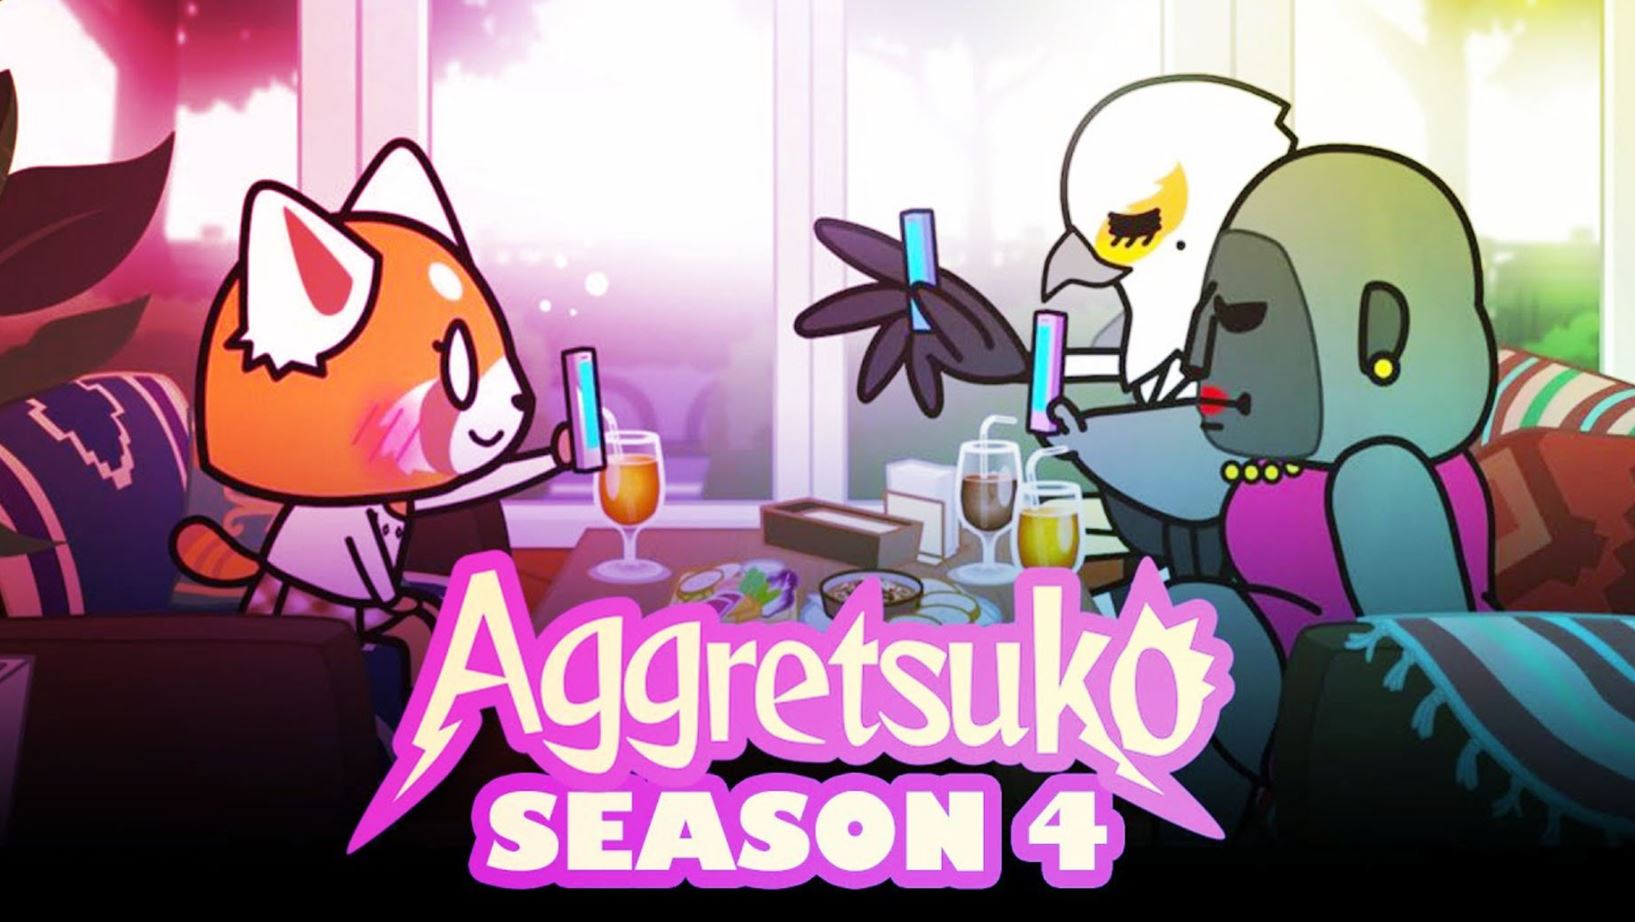 Aggretsuko Season 4 